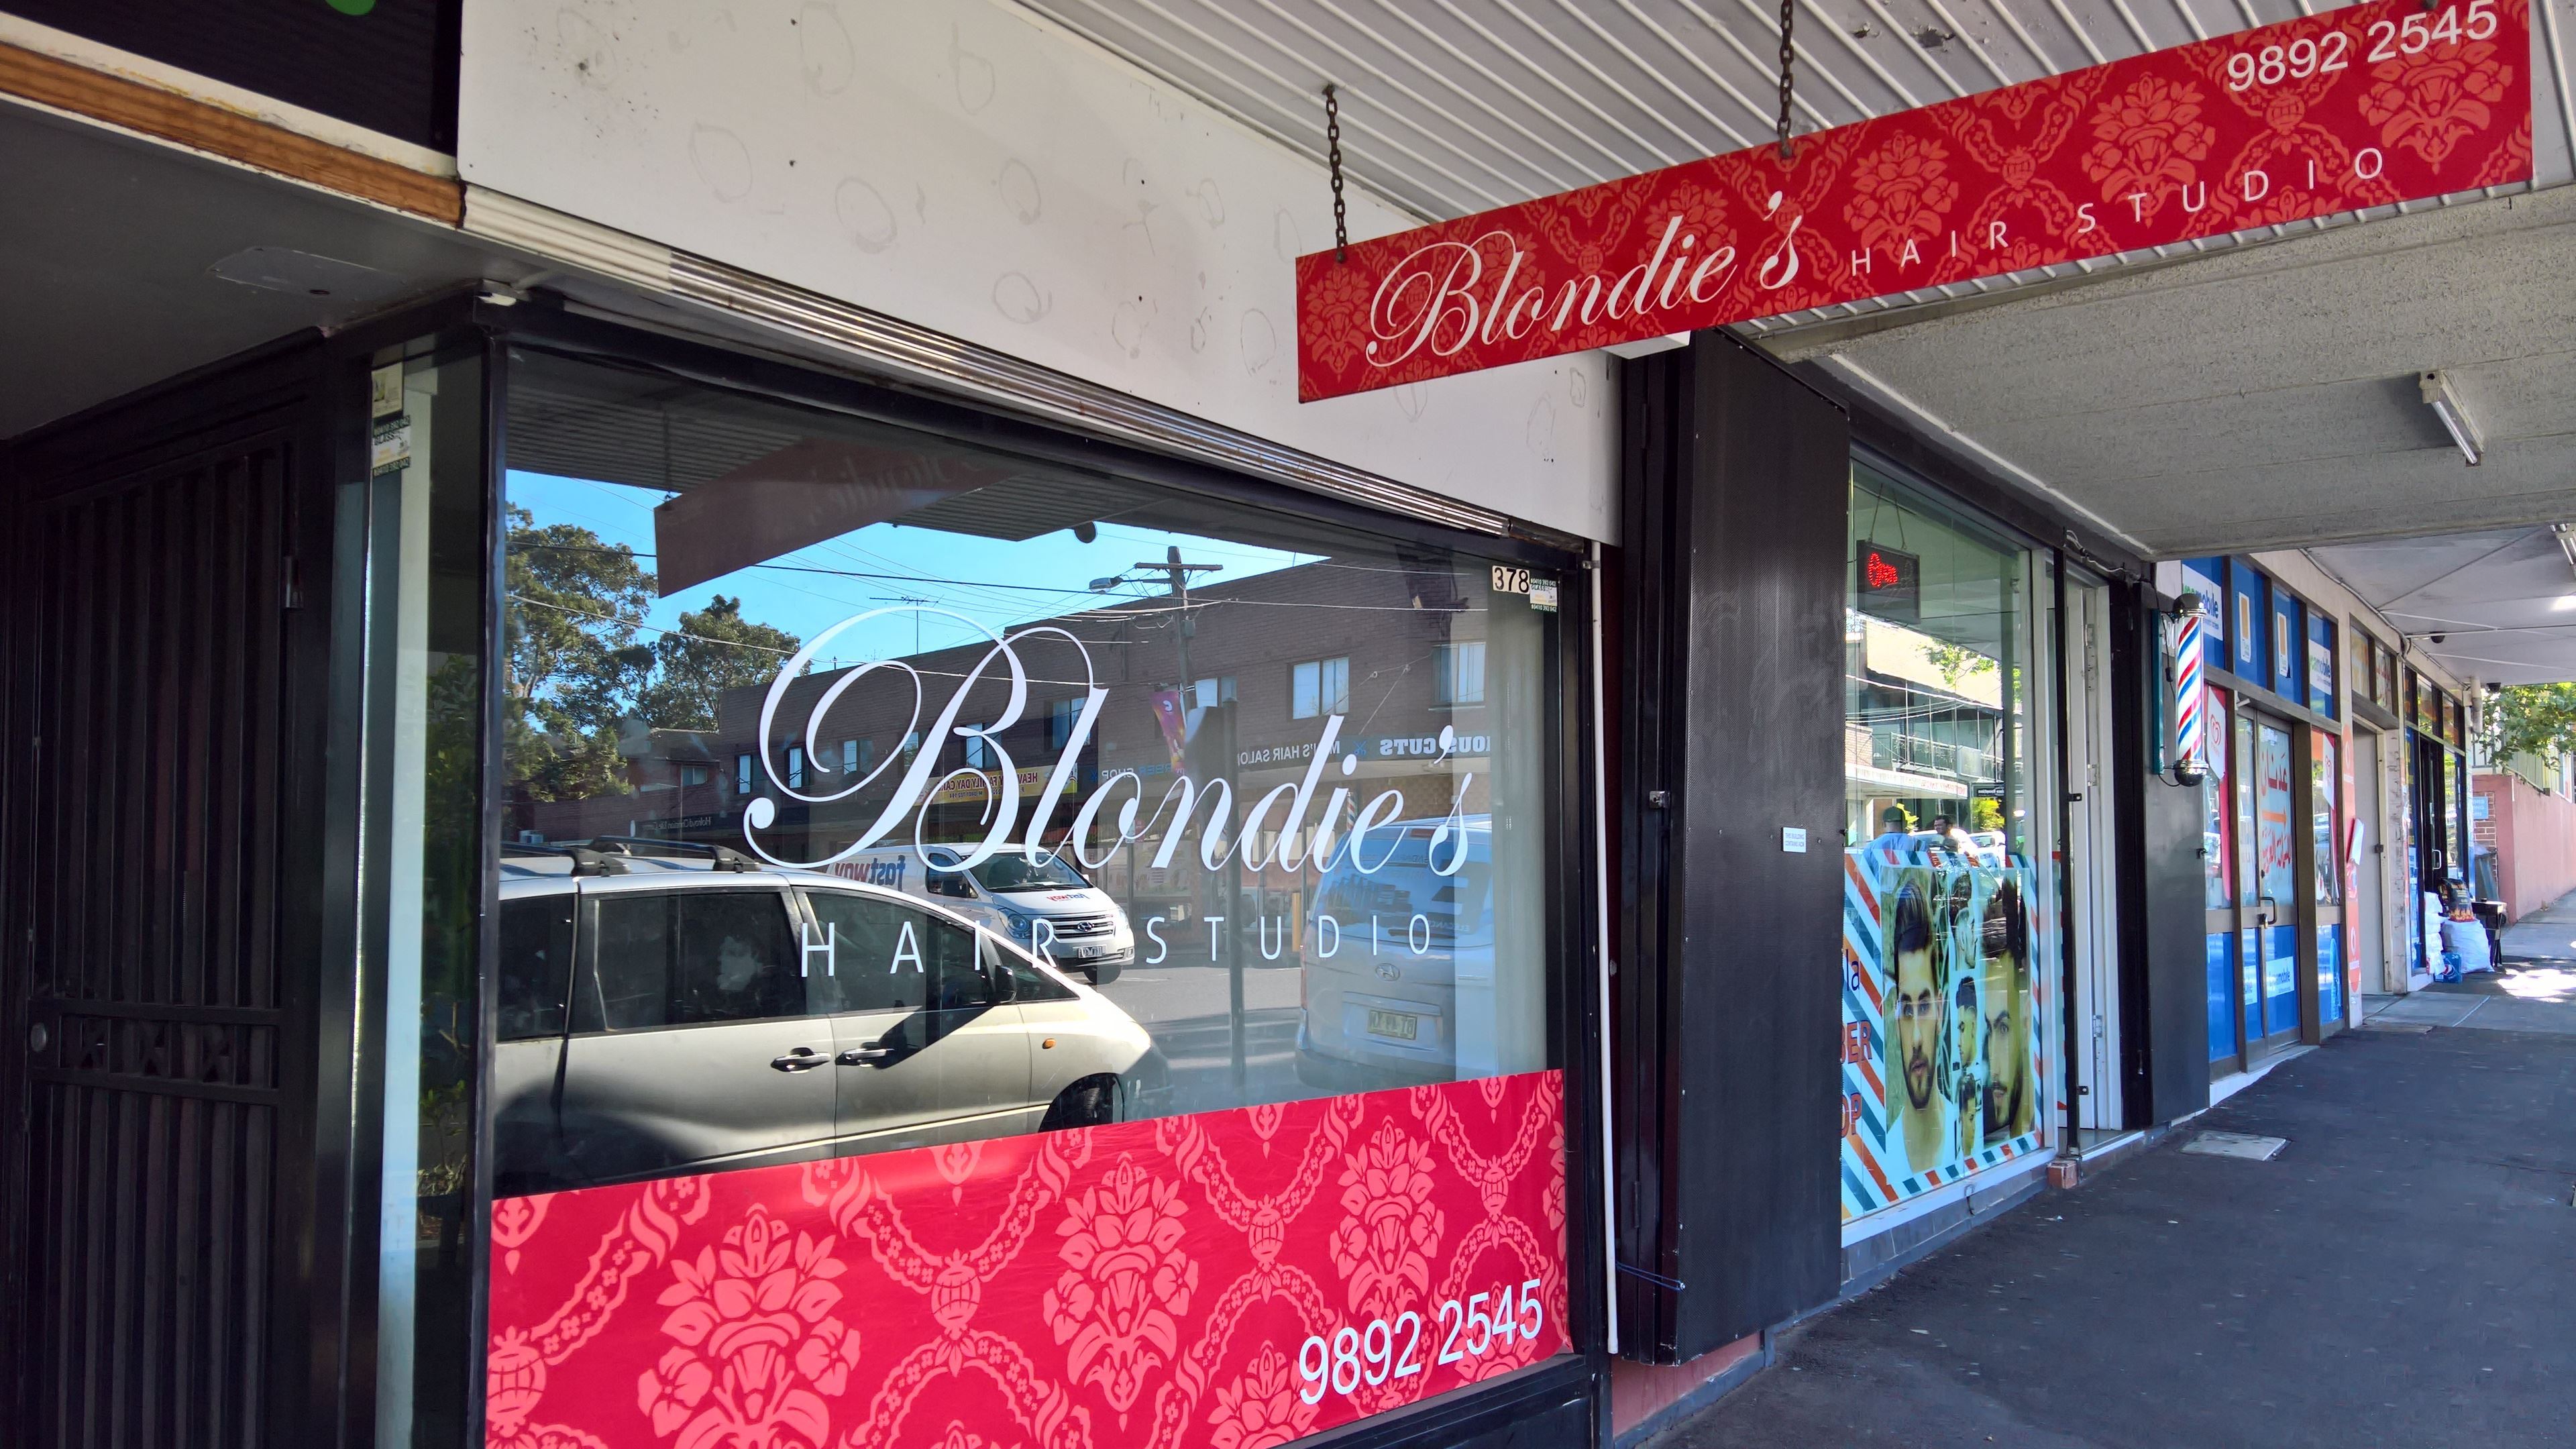 Blondie's Hair Studio | Haircuts | Hairdresser